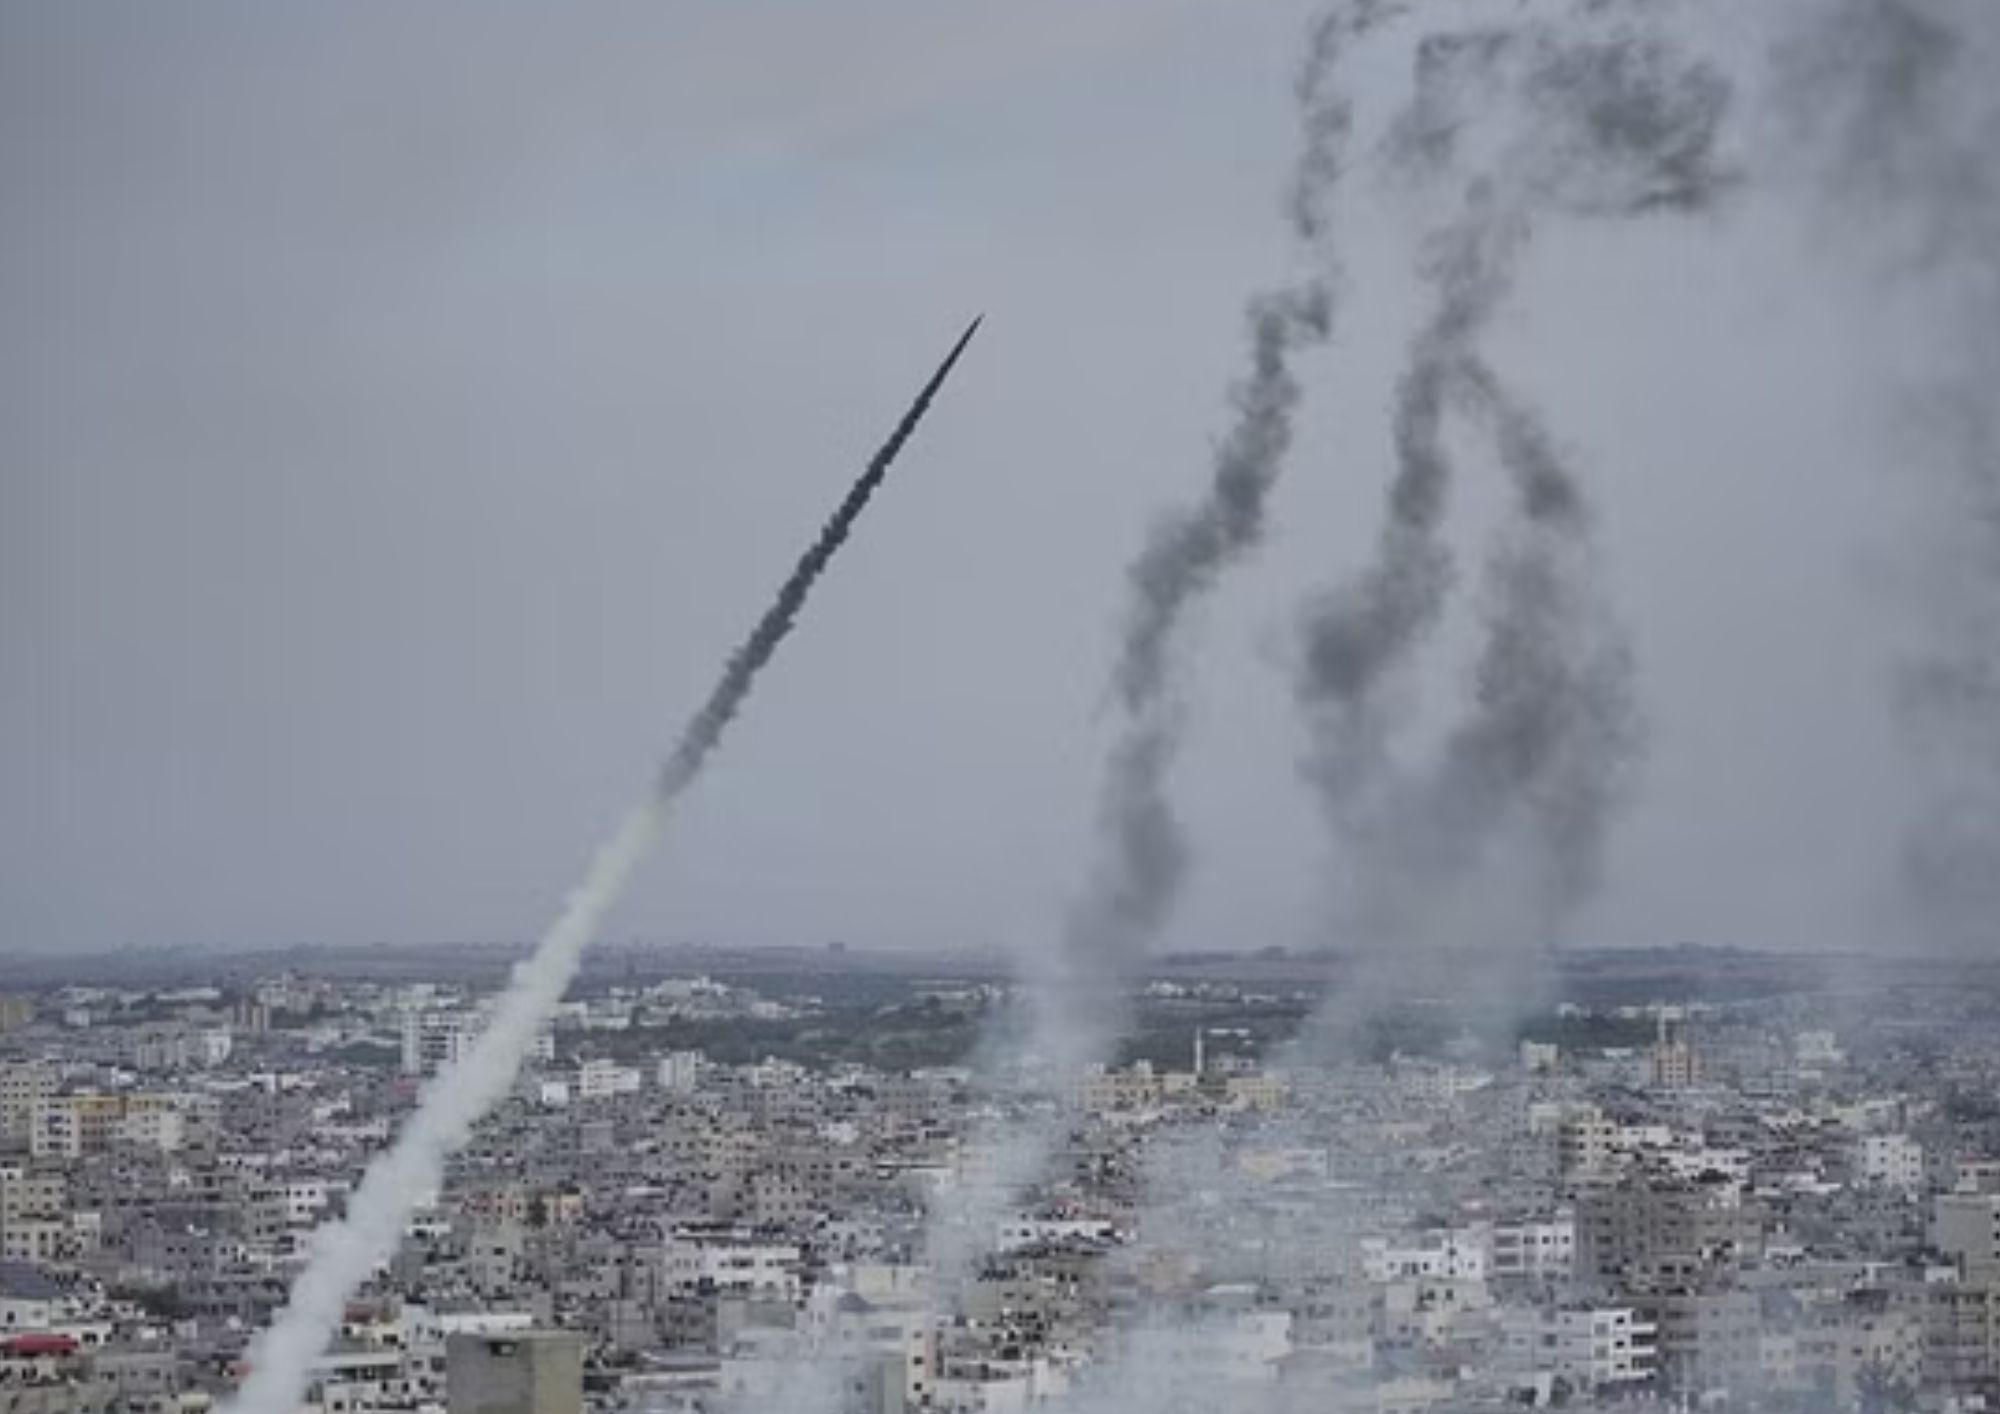 Israel Iran War - Israel retaliates against Iran, fired missiles, report claims